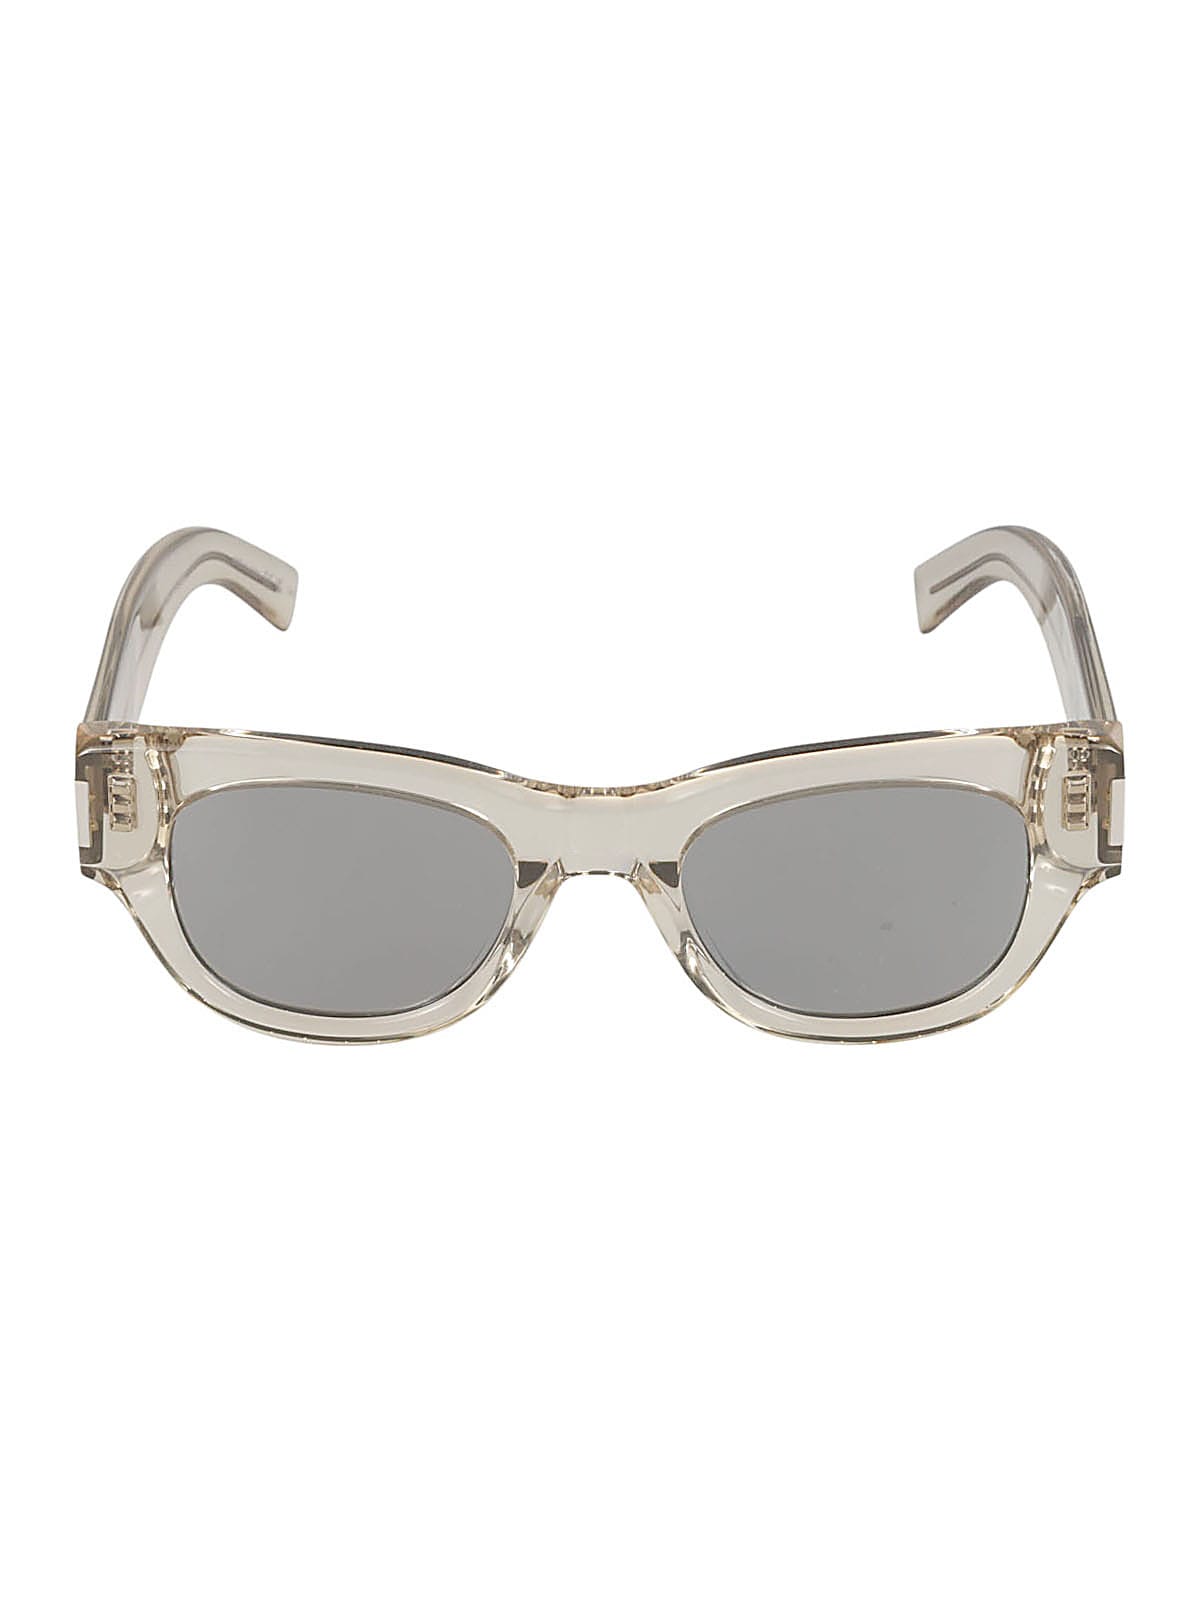 Saint Laurent Round Frame Transparent Sunglasses In Beige/silver